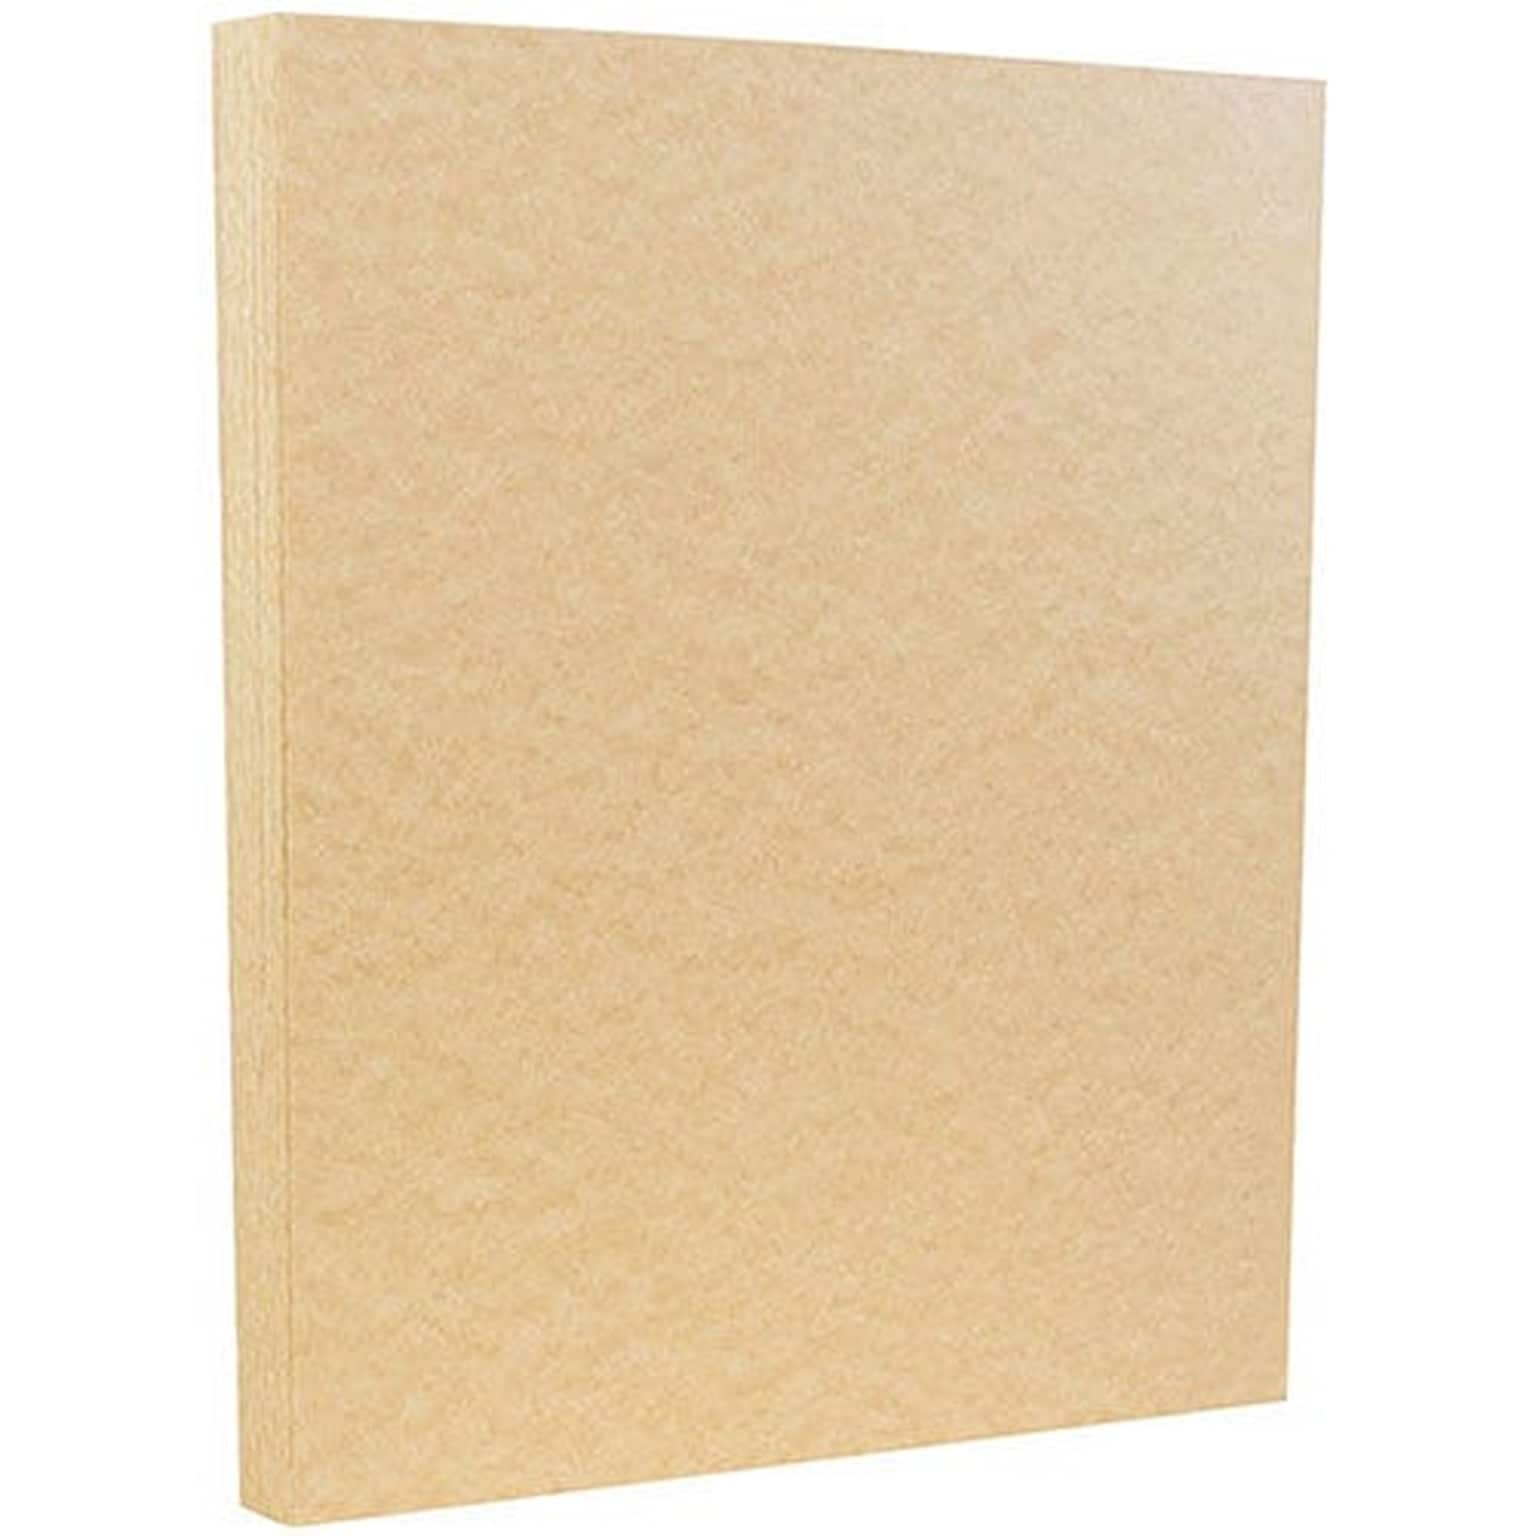 JAM PAPER 8.5 x 11 Parchment Cardstock, 65lb, Brown, 100/pack  (96700100G)